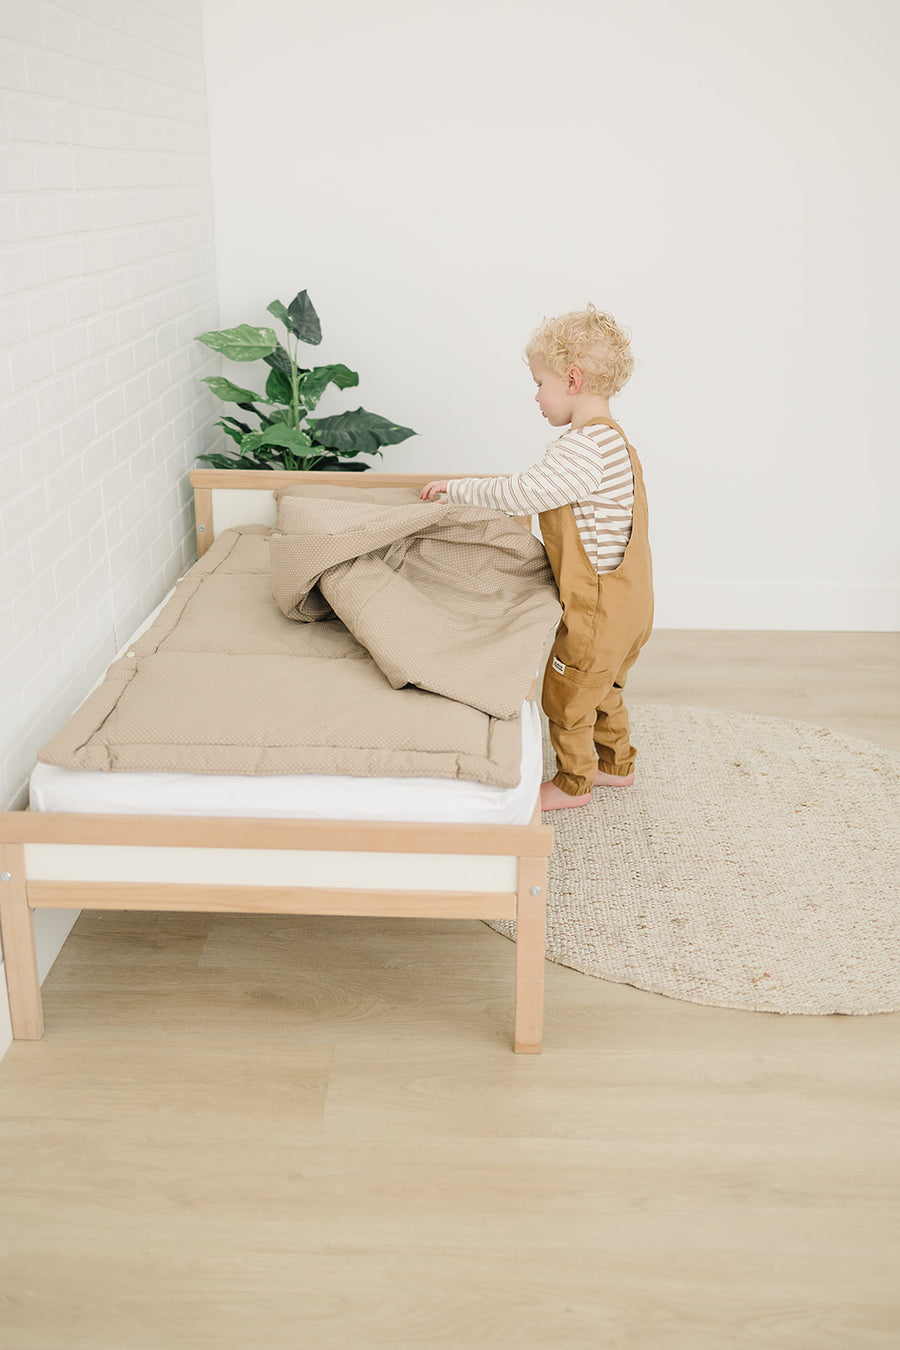 Toddler Portable Bedding Sets